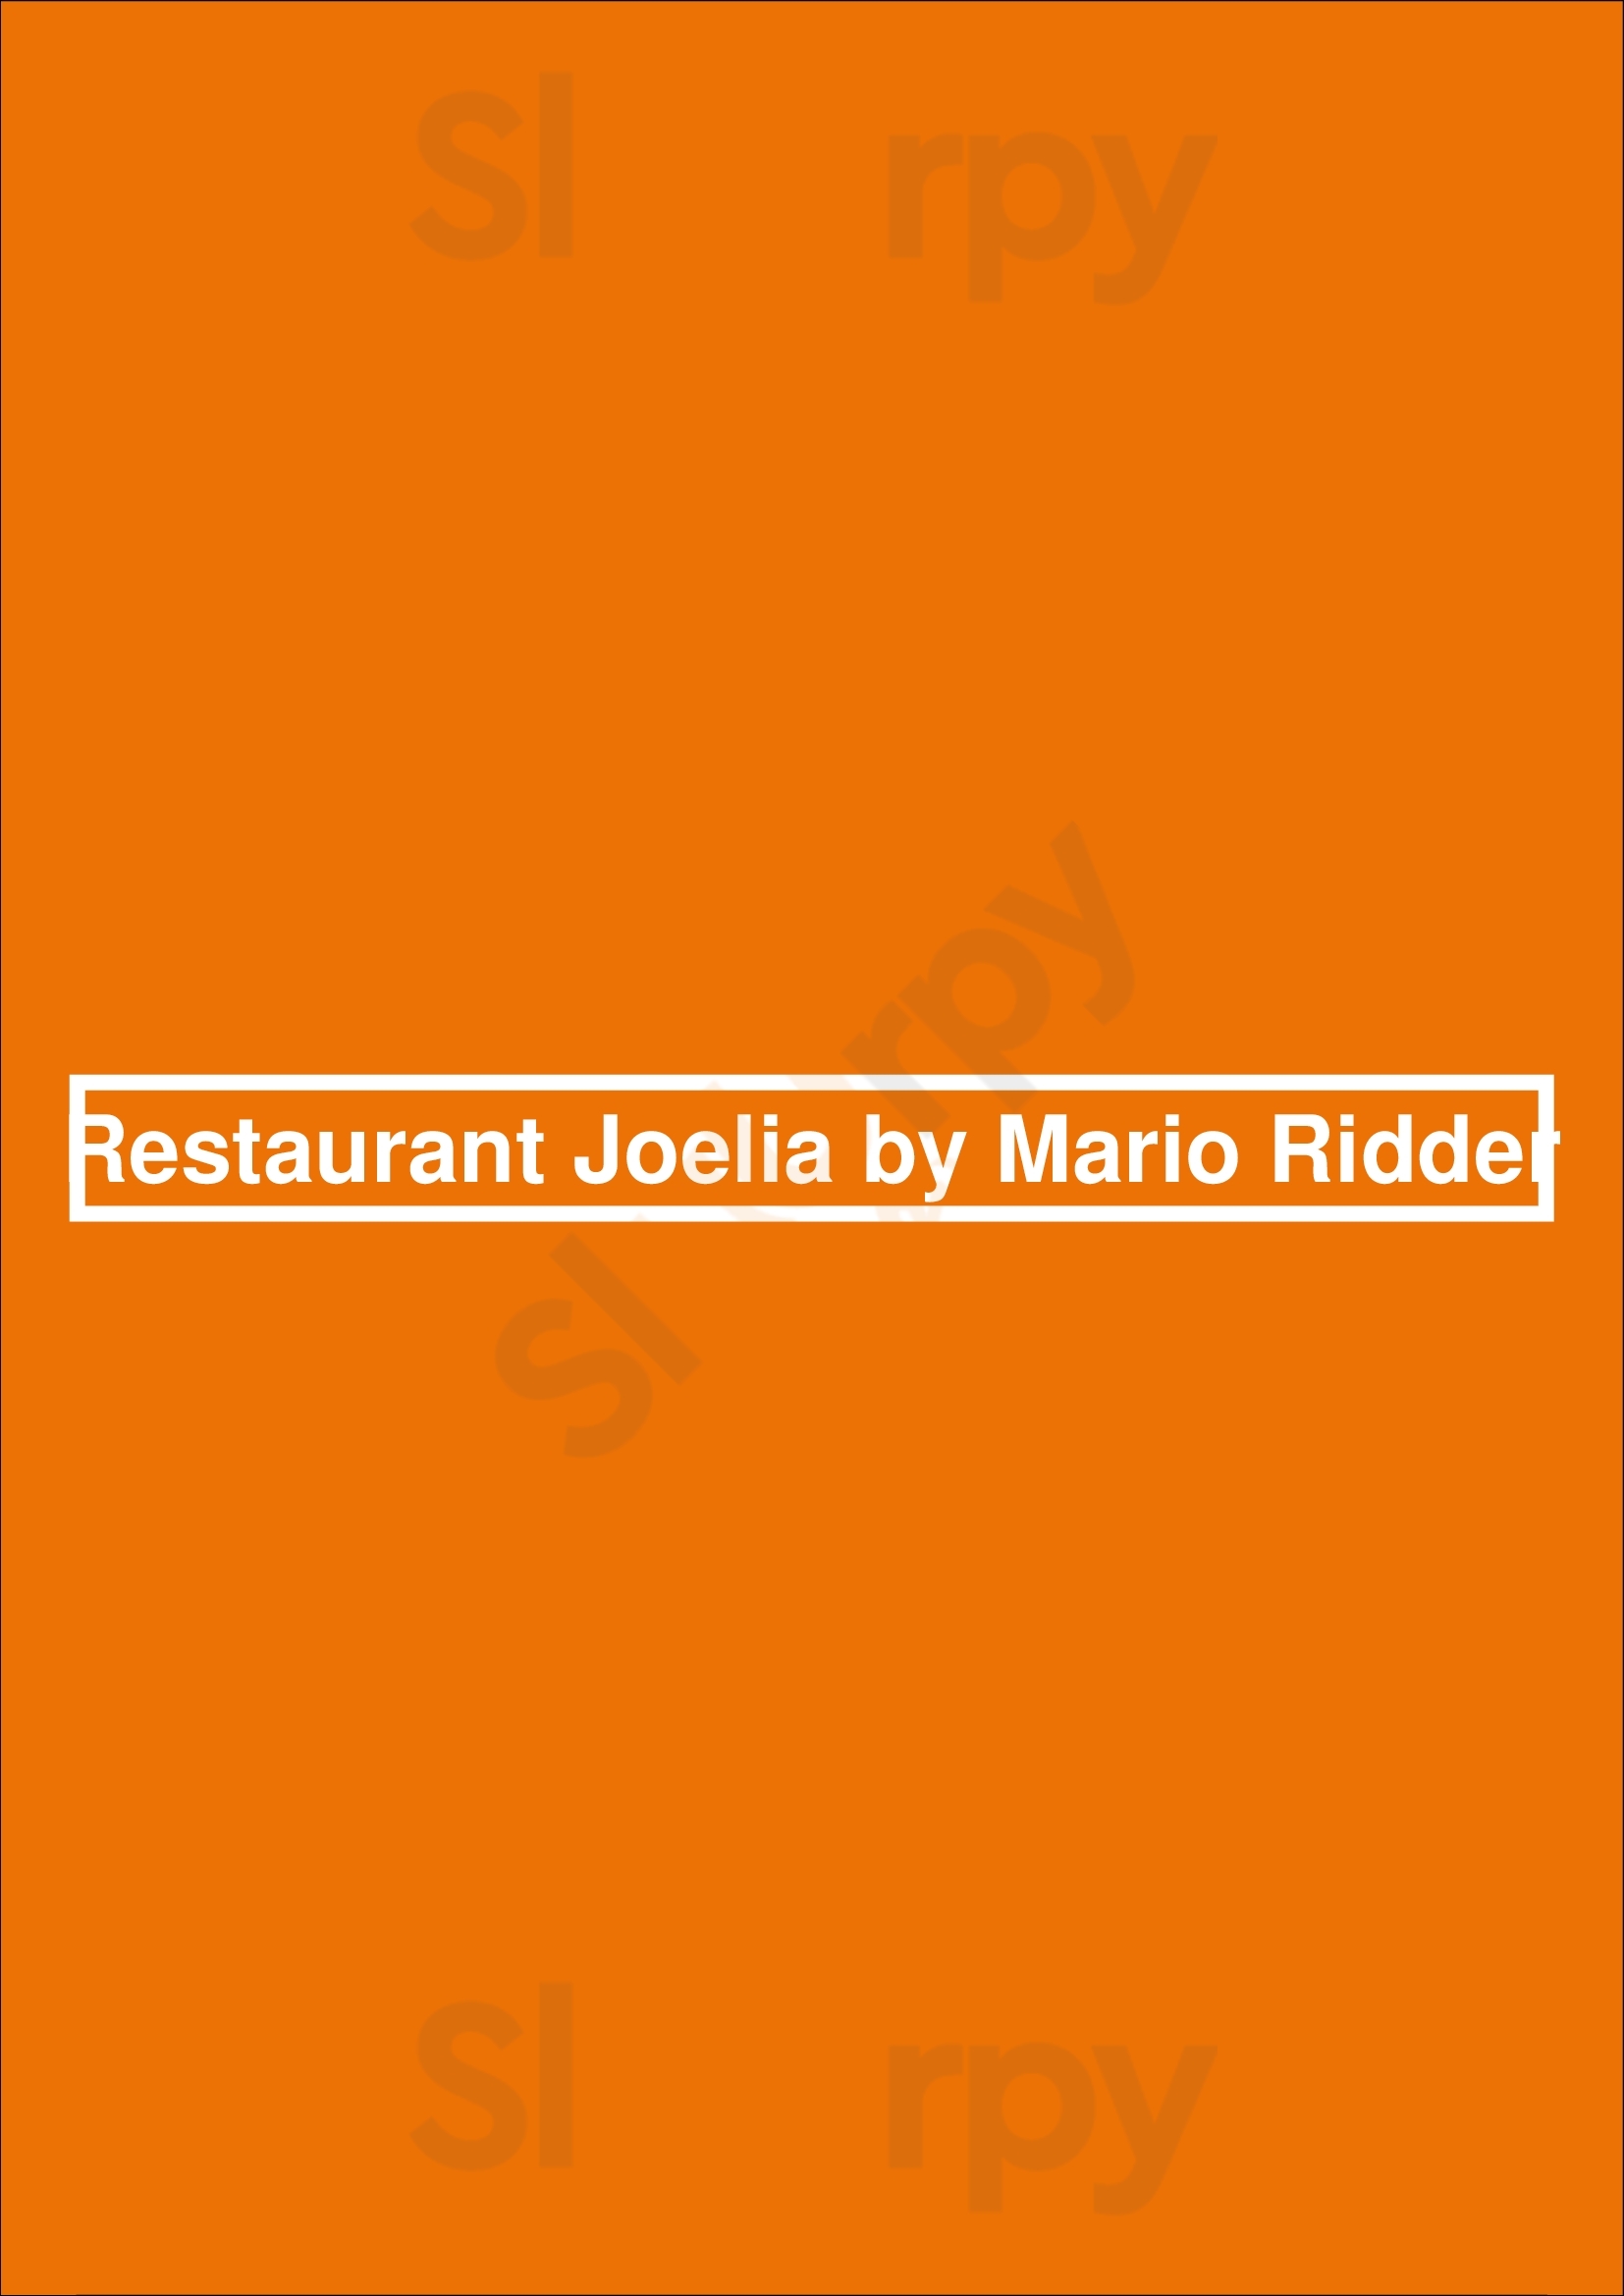 Restaurant Joelia By Mario Ridder Rotterdam Menu - 1